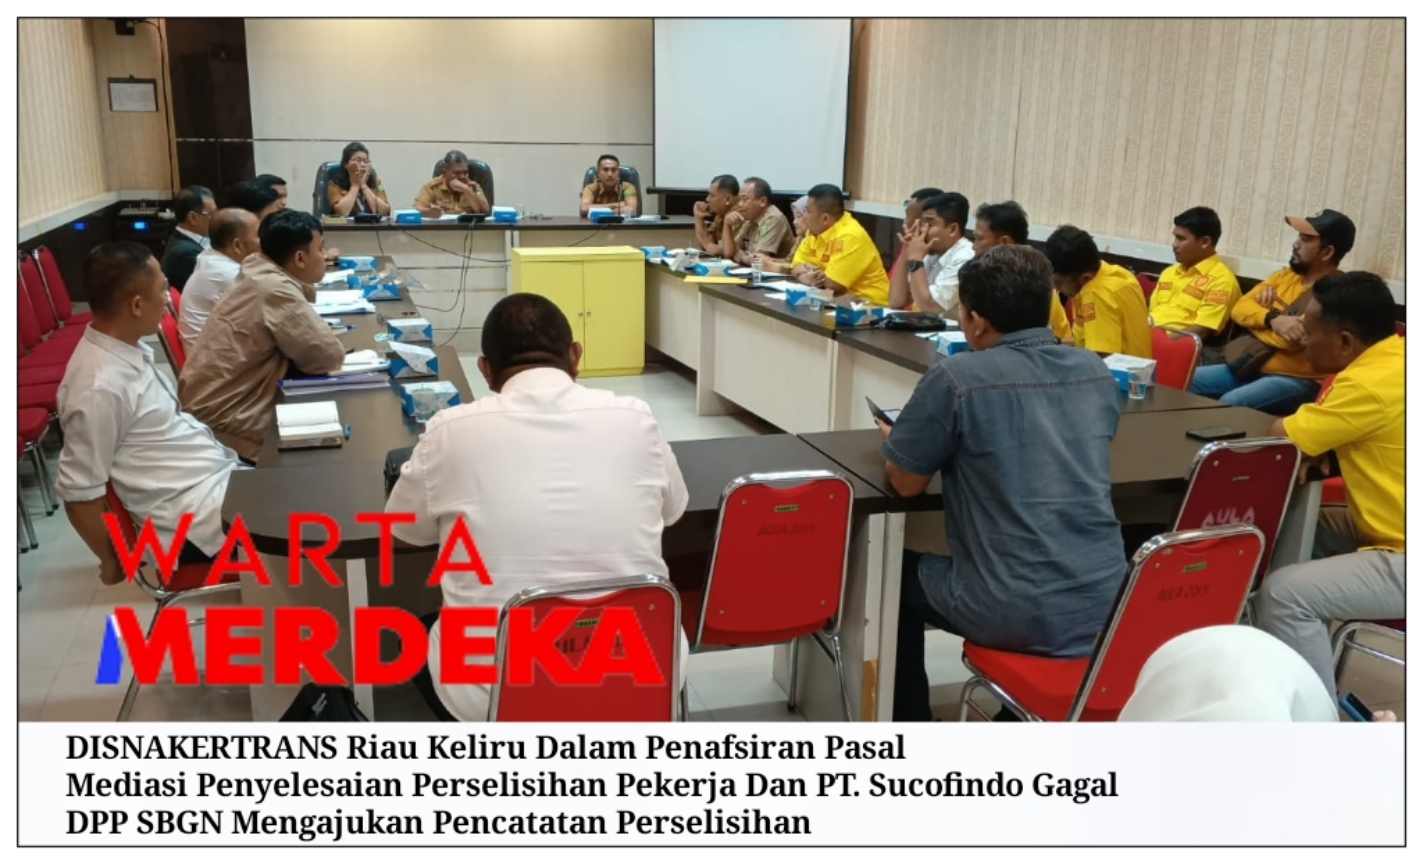 DISNAKERTRANS Riau Keliru Dalam Penafsiran Pasal Mediasi Penyelesaian Perselisihan Pekerja Dan PT. Sucofindo Gagal DPP SBGN Mengajukan Pencatatan Perselisihan